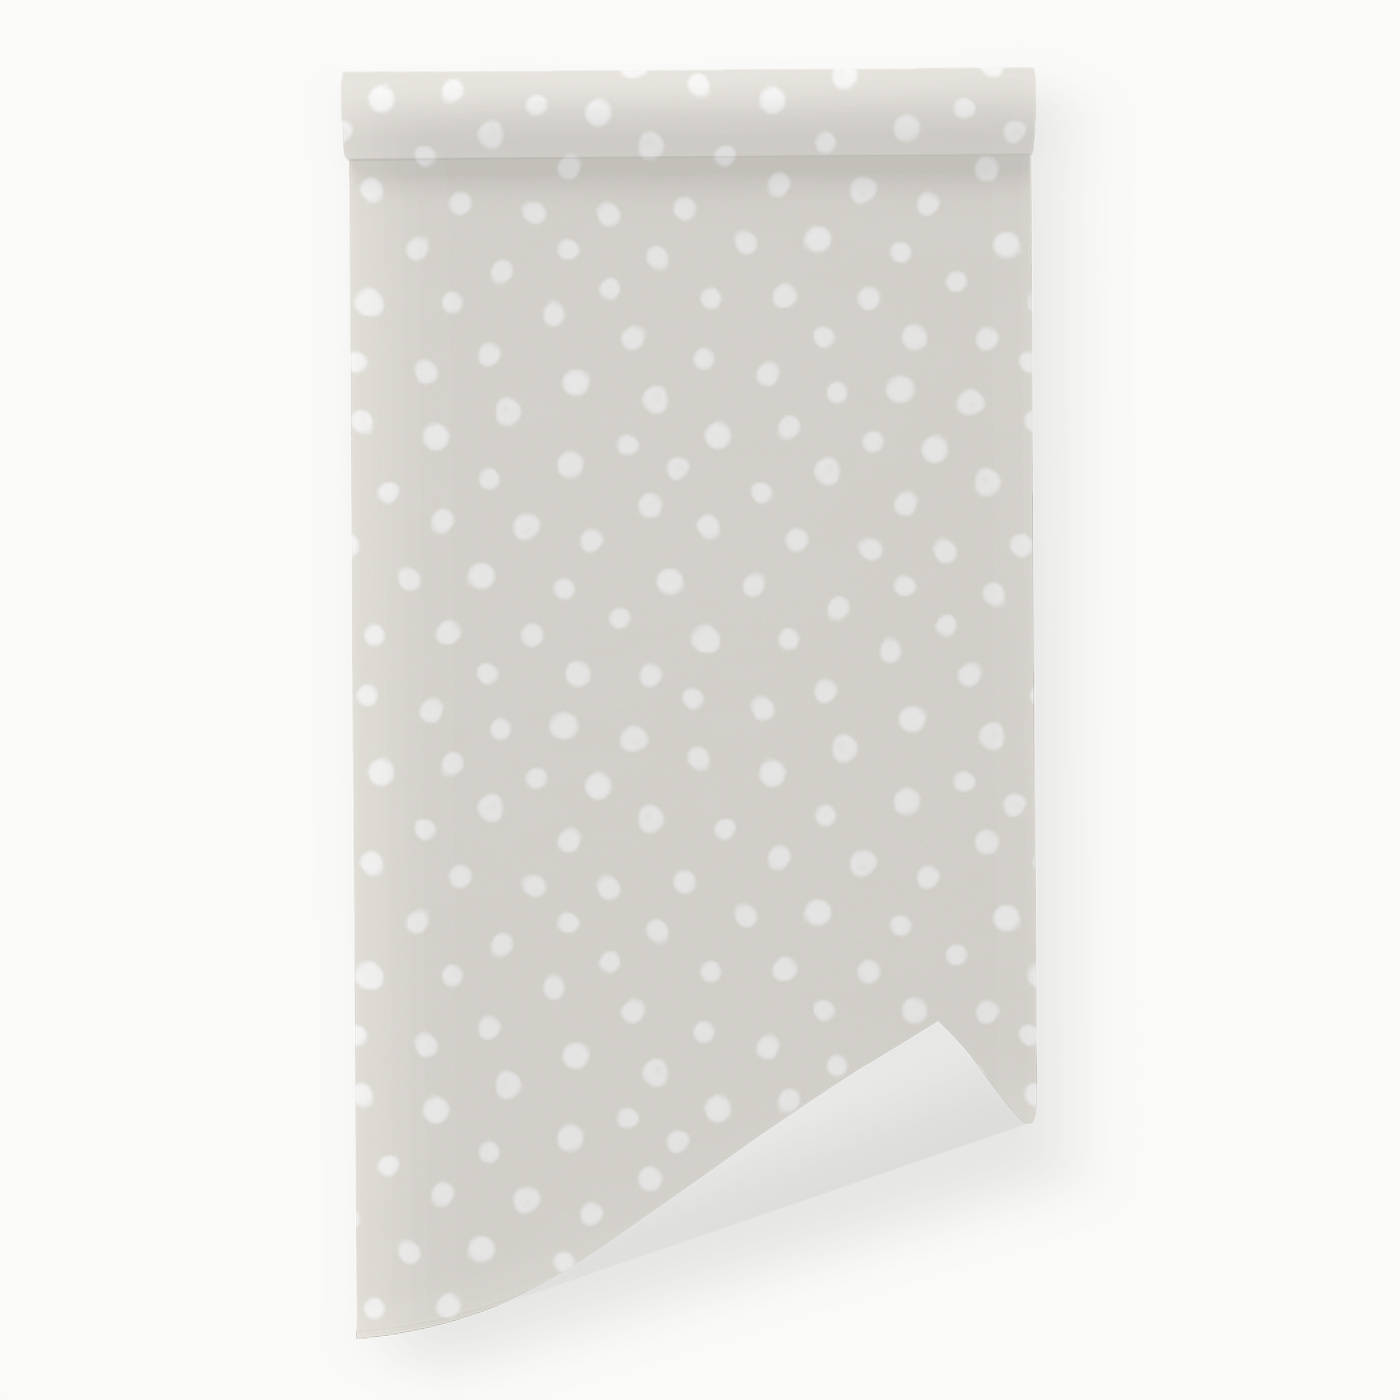 Gray And White Polka Dot Background